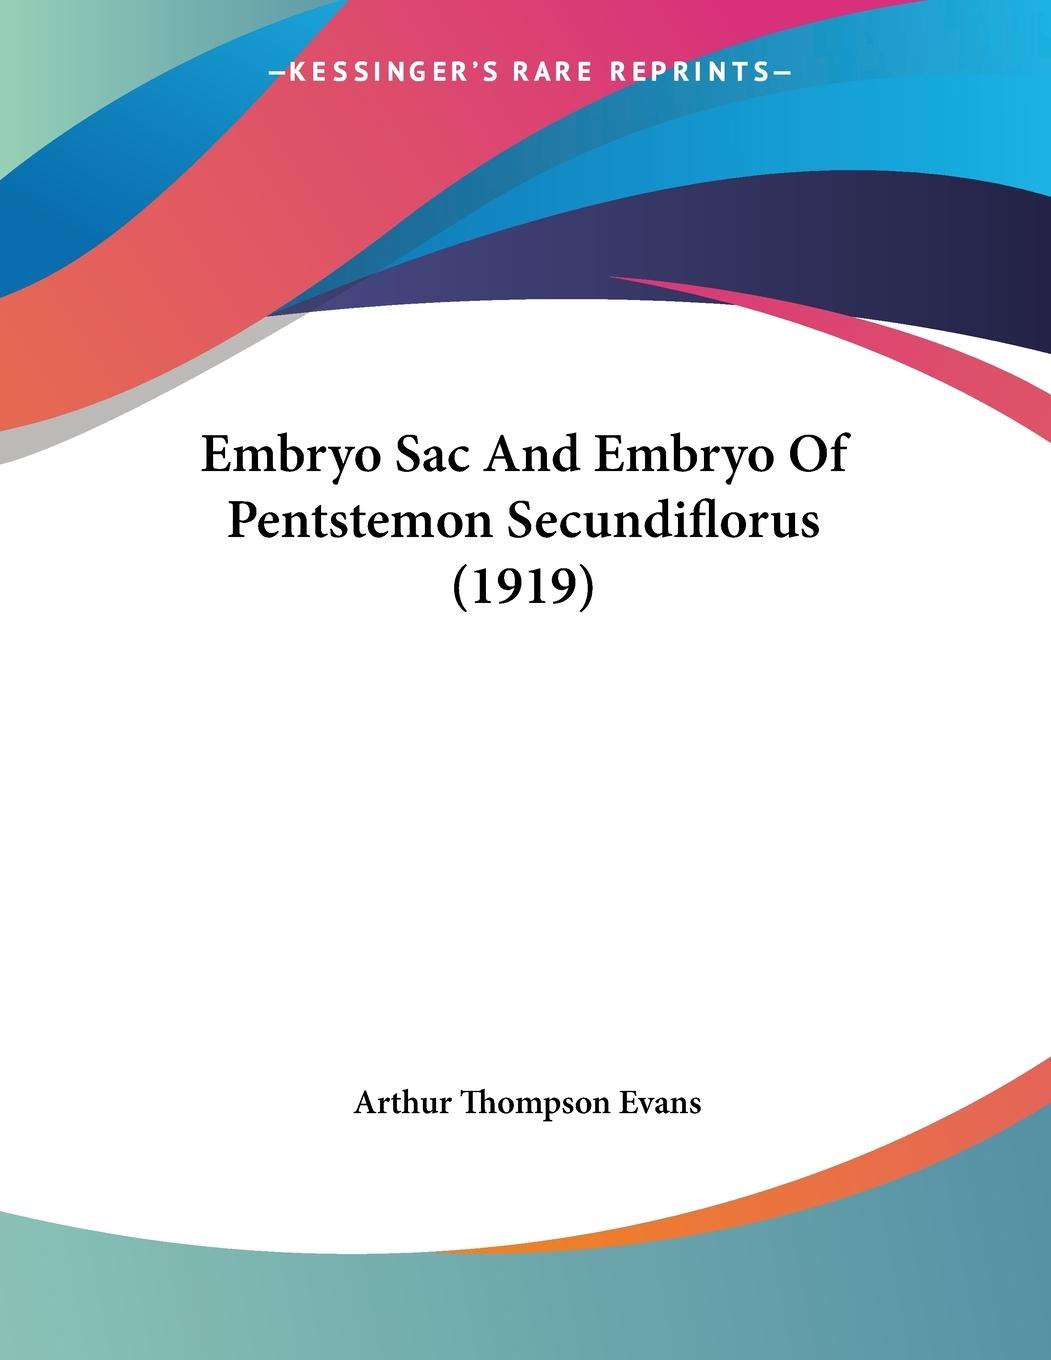 Embryo Sac And Embryo Of Pentstemon Secundiflorus (1919) - Evans, Arthur Thompson